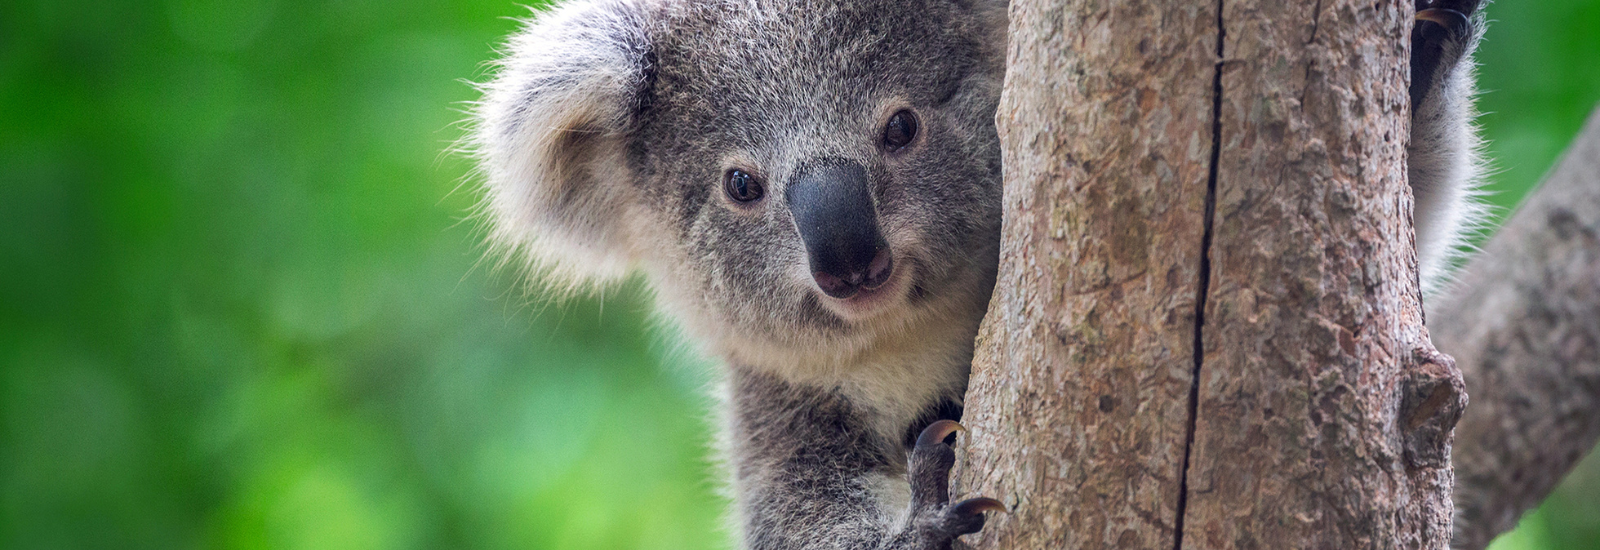 Koala in tree banner image